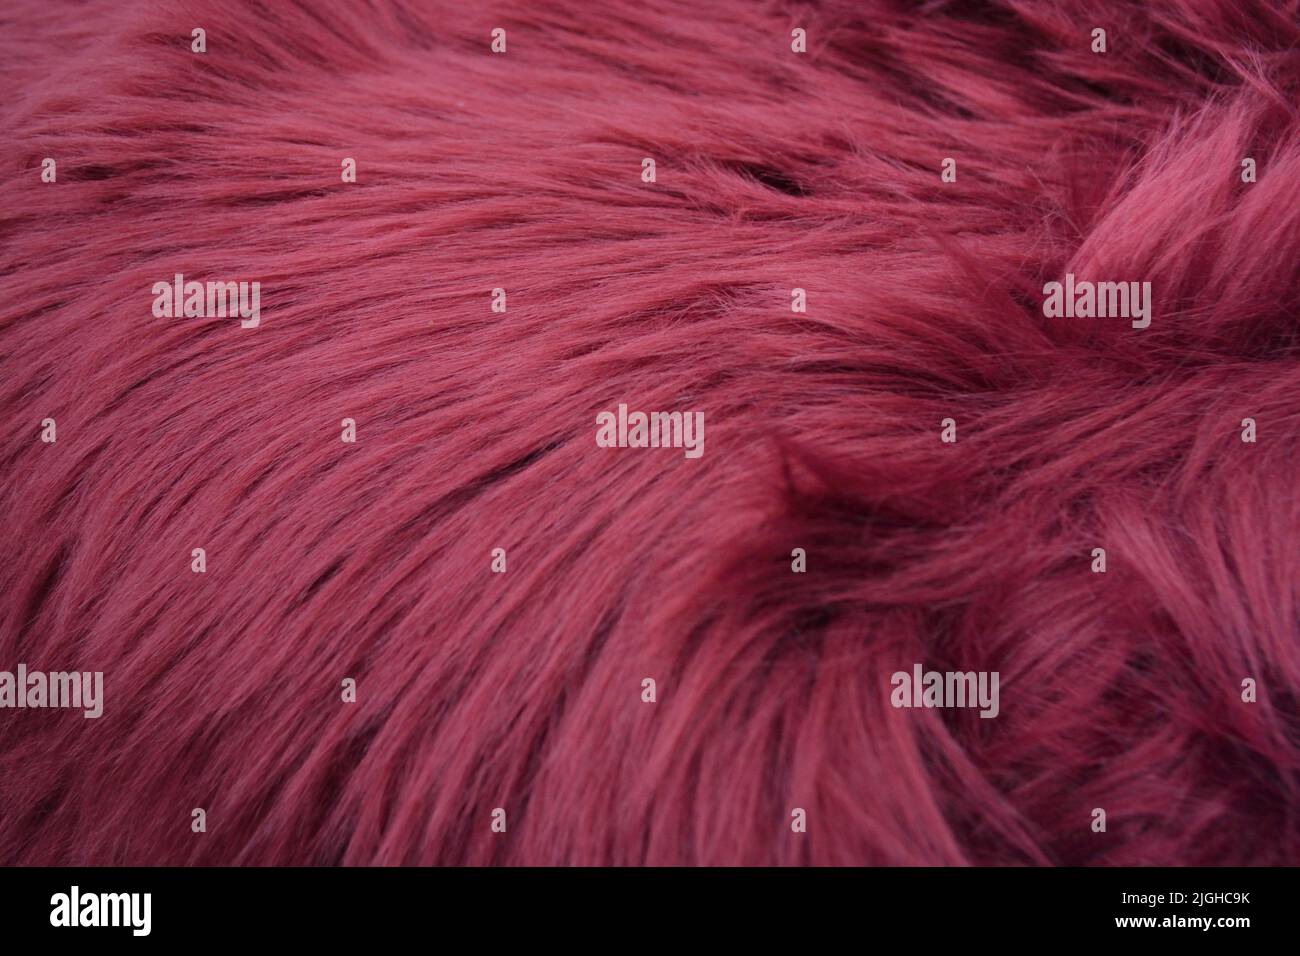 Fuchsia shaggy long pile artificial fur texture Stock Photo